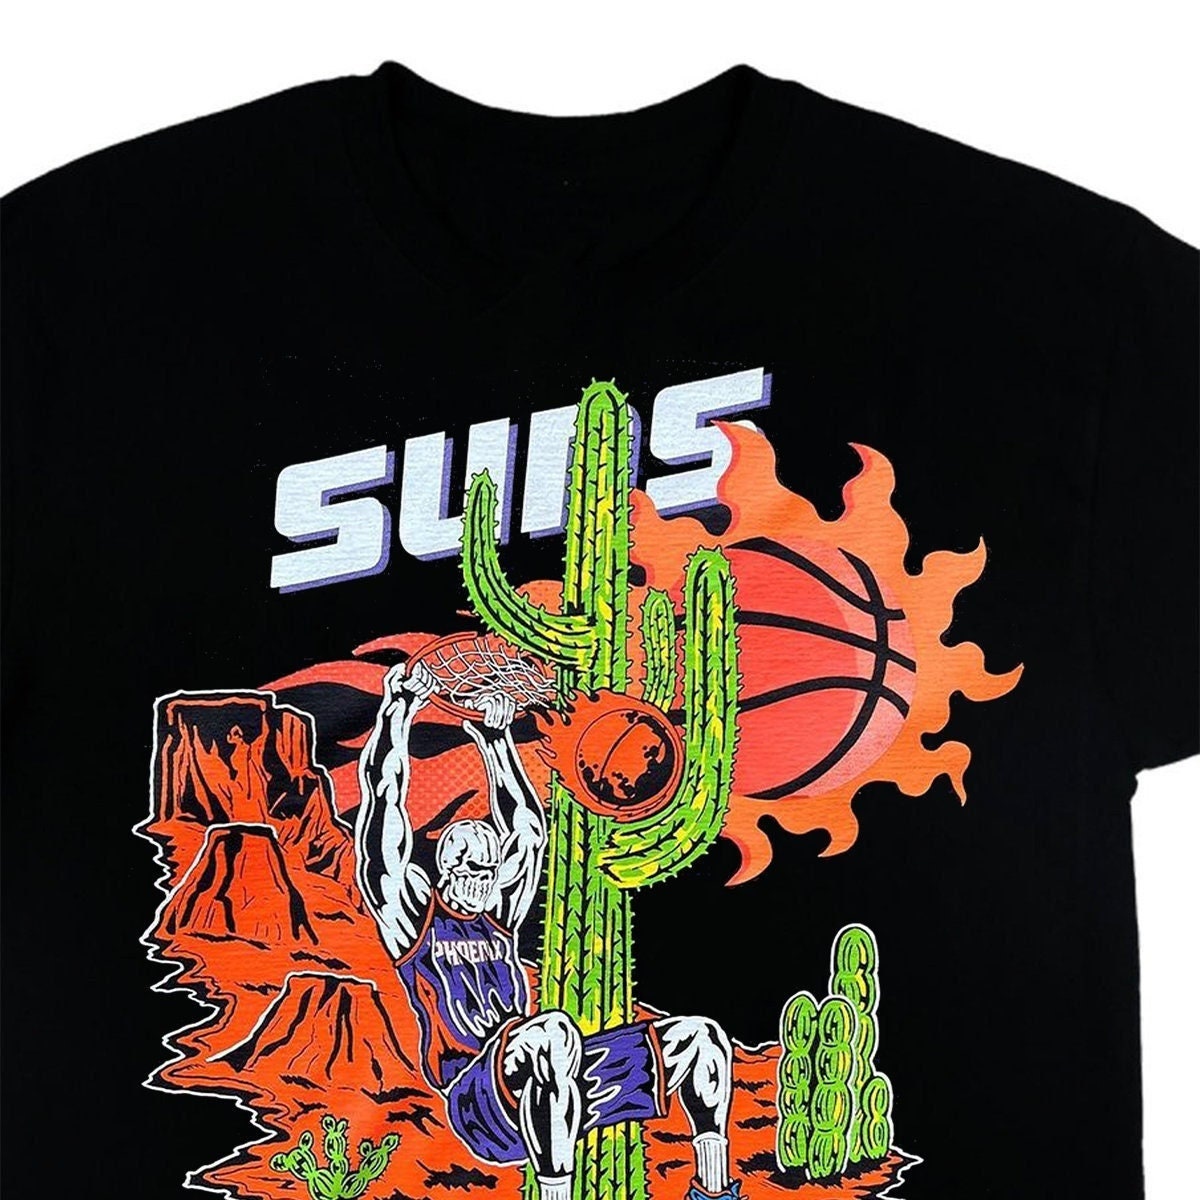 Warren Lotas x Phoenix Suns “Son Of The Valley” size M